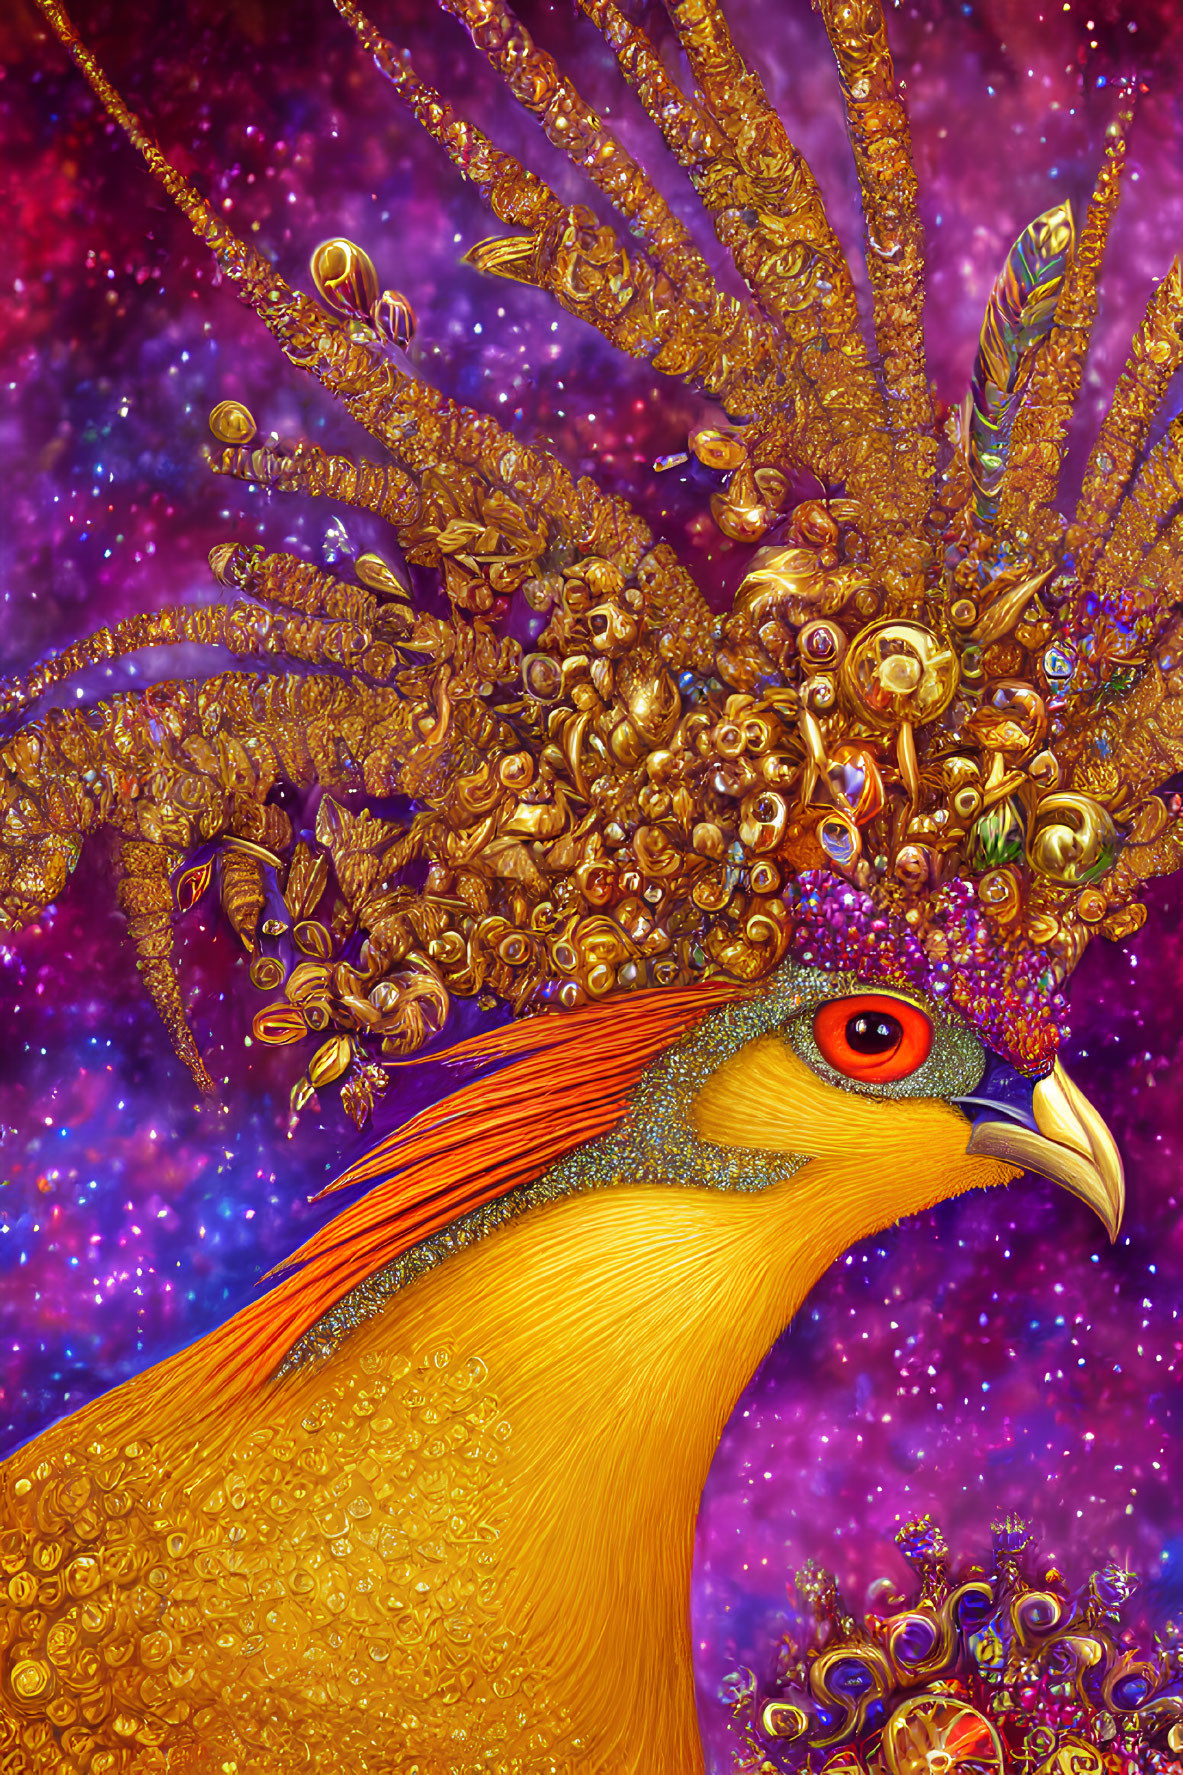 Golden Phoenix with Jewel-Encrusted Headpiece on Cosmic Background